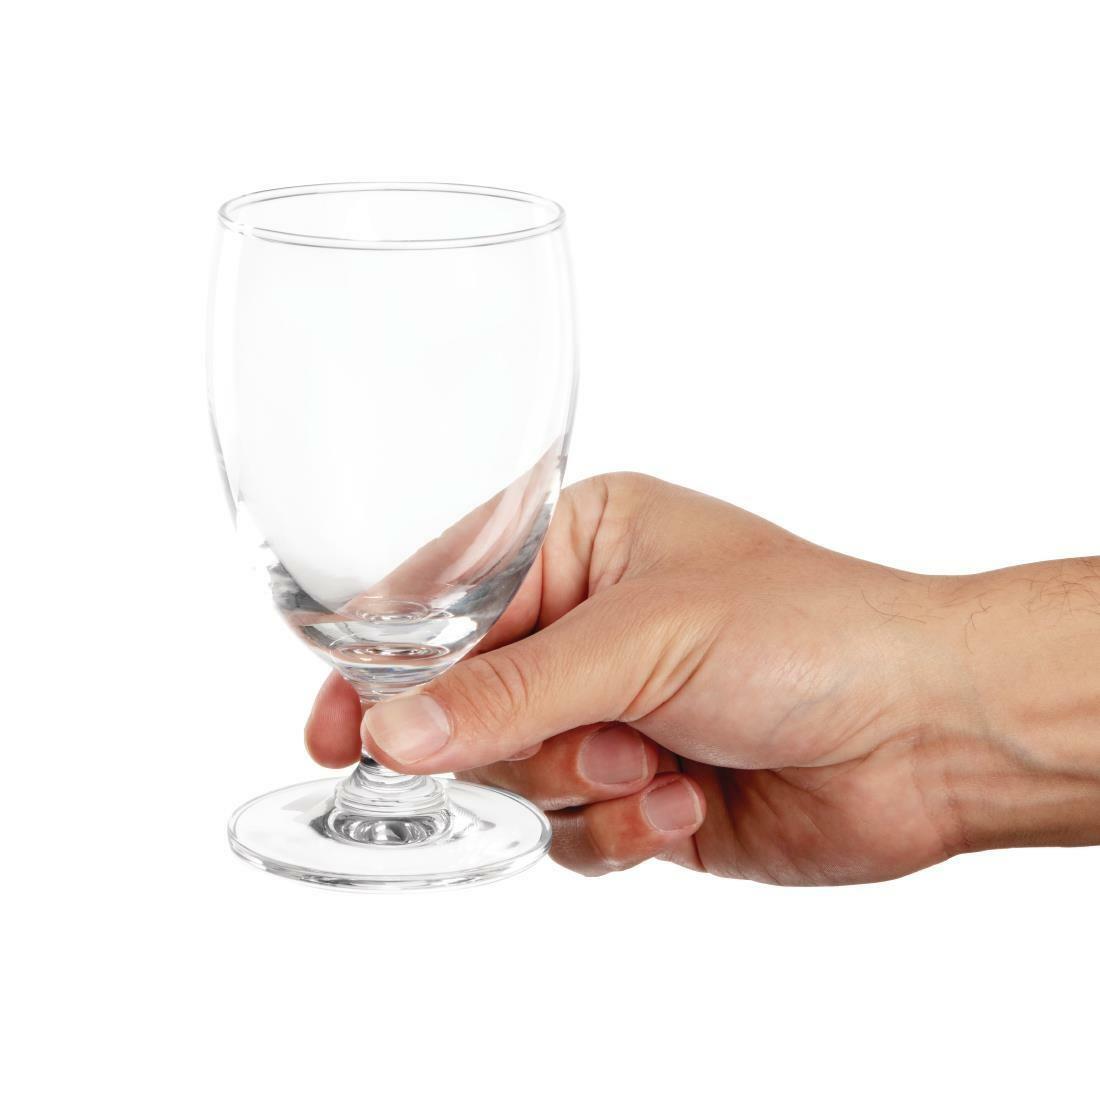 DC025 - 1500G11 - Olympia Cocktail Short Stemmed Wine Glasses